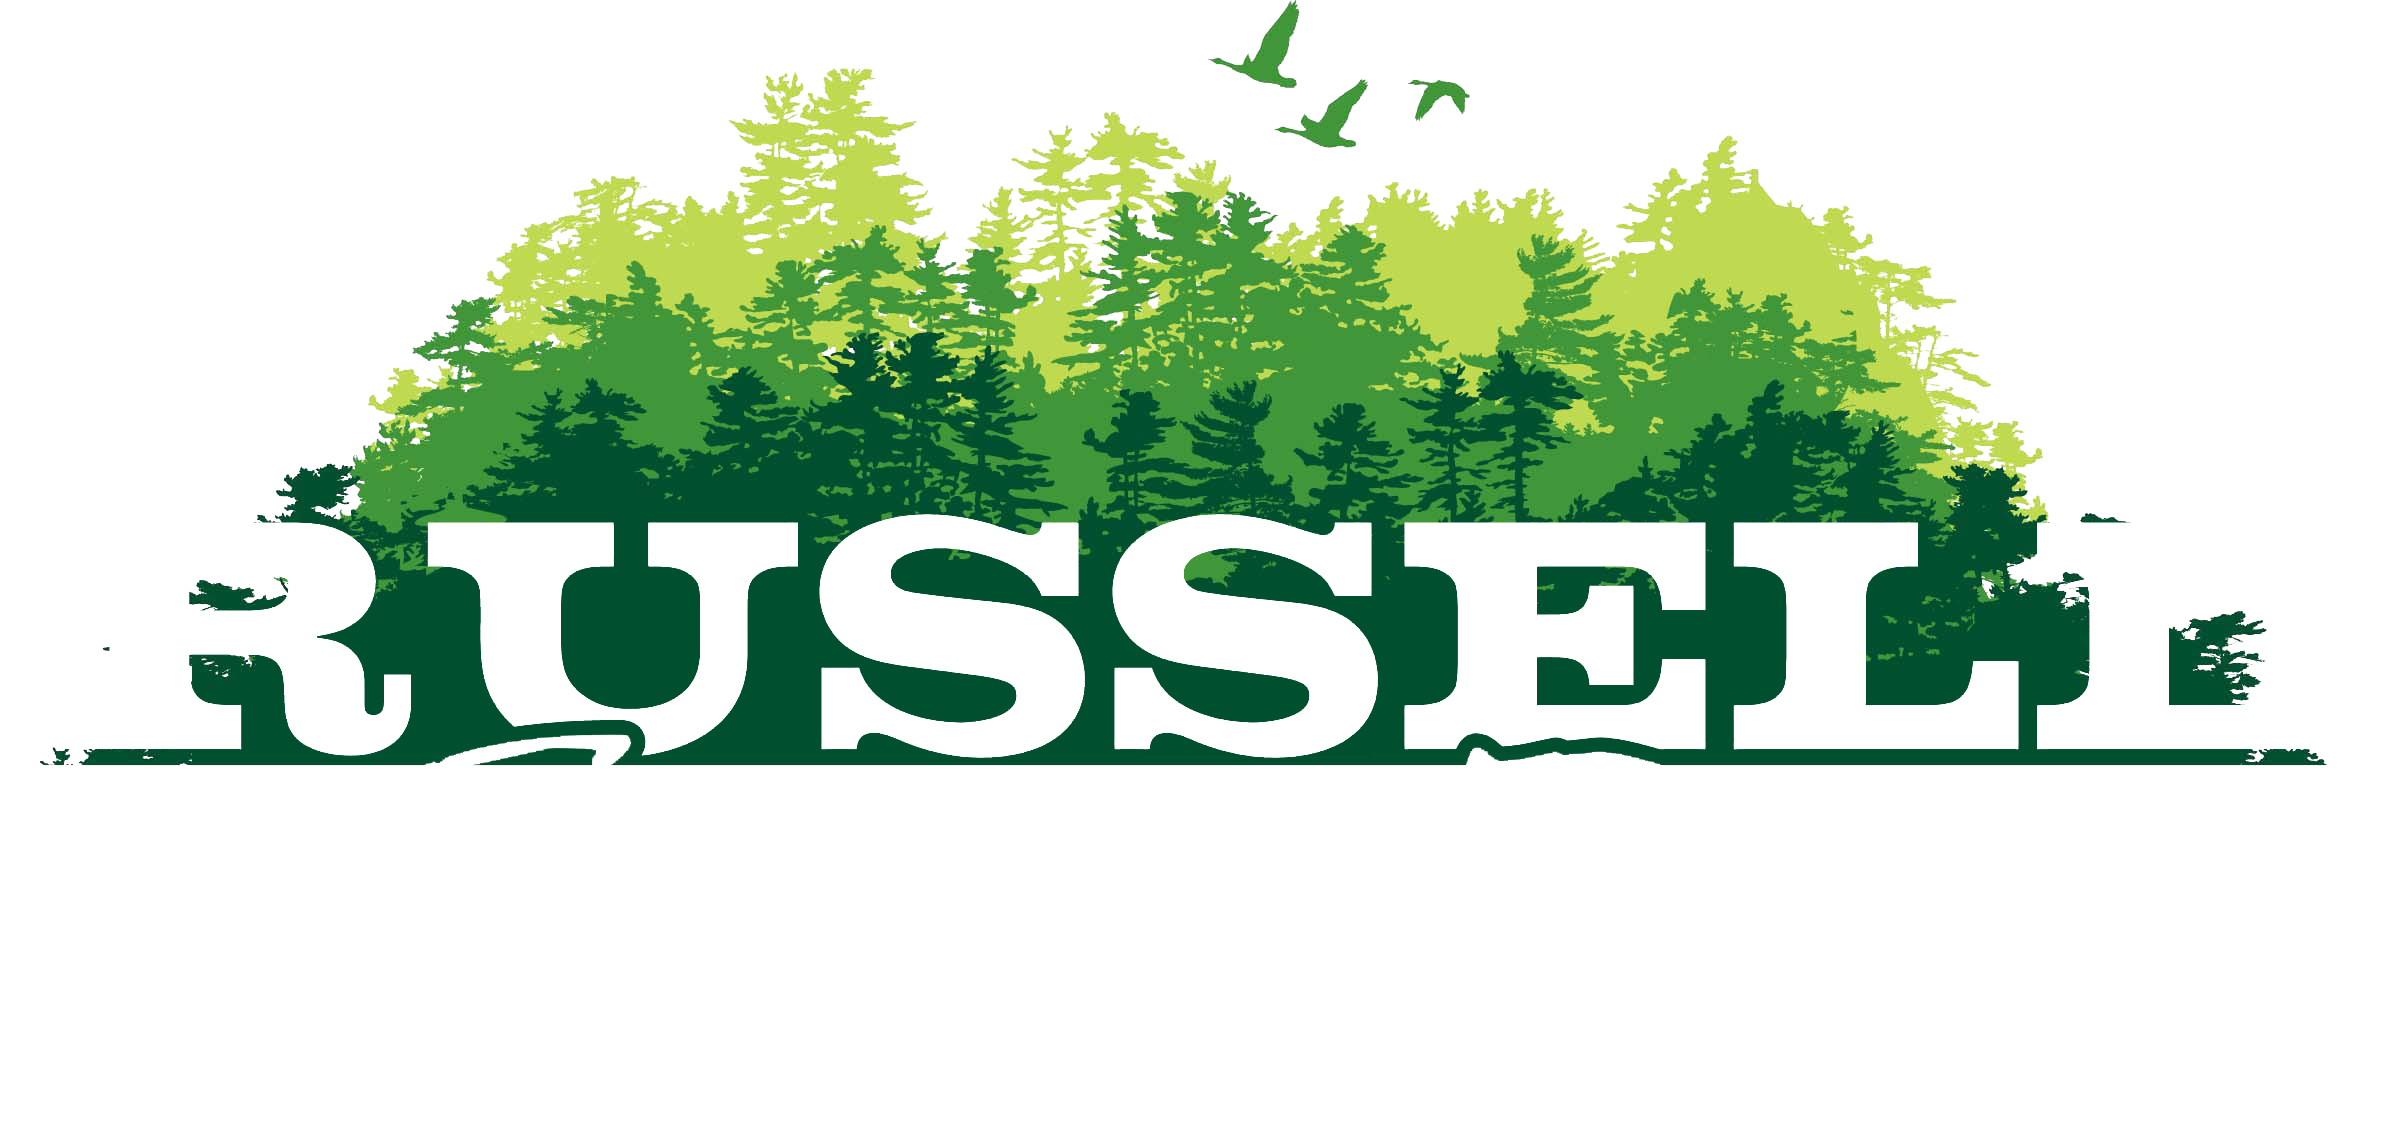 Russell Forest Run